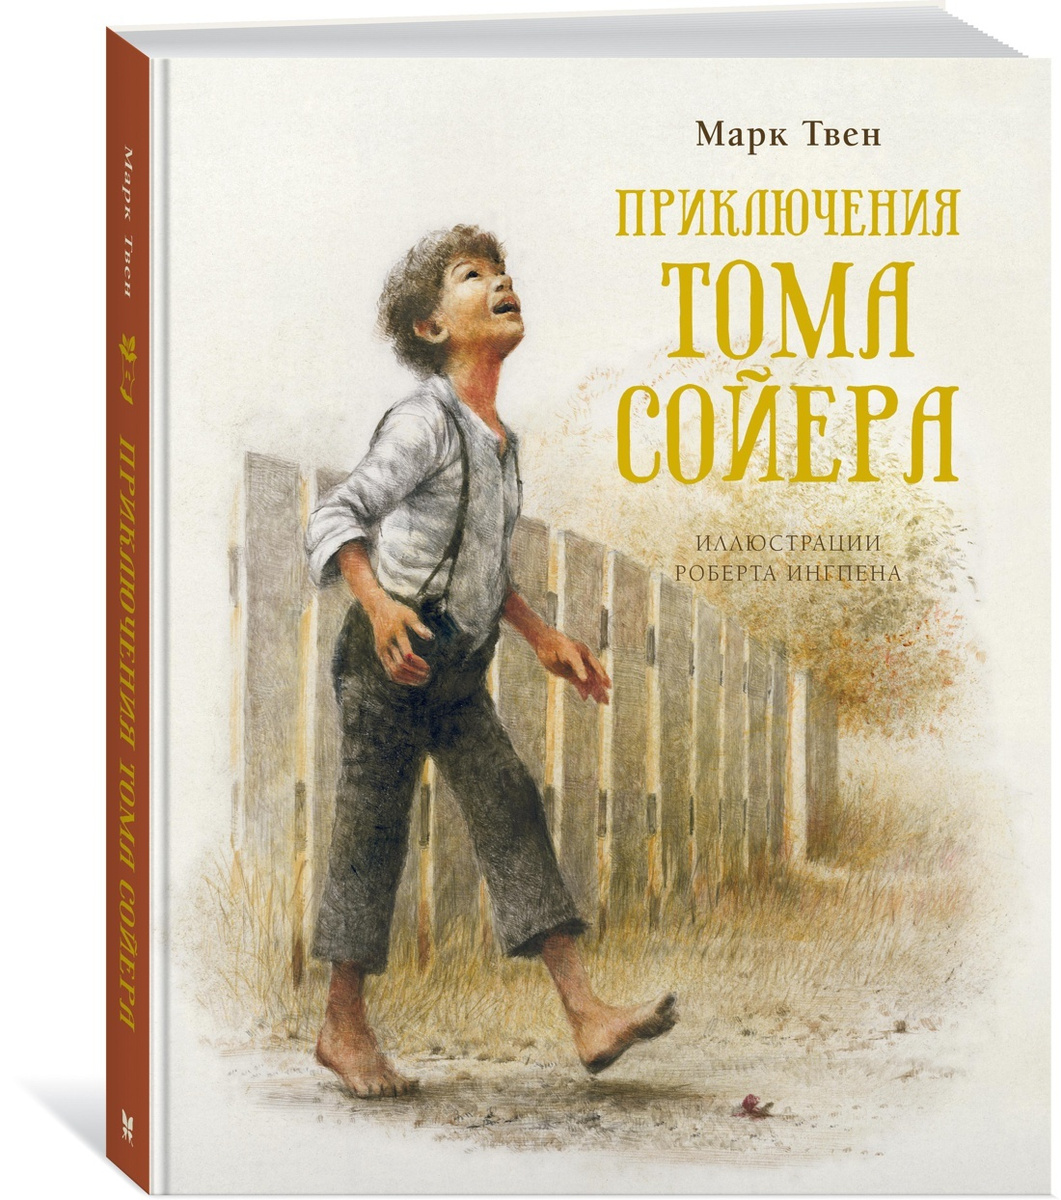 Книга: Приключения Тома Сойера